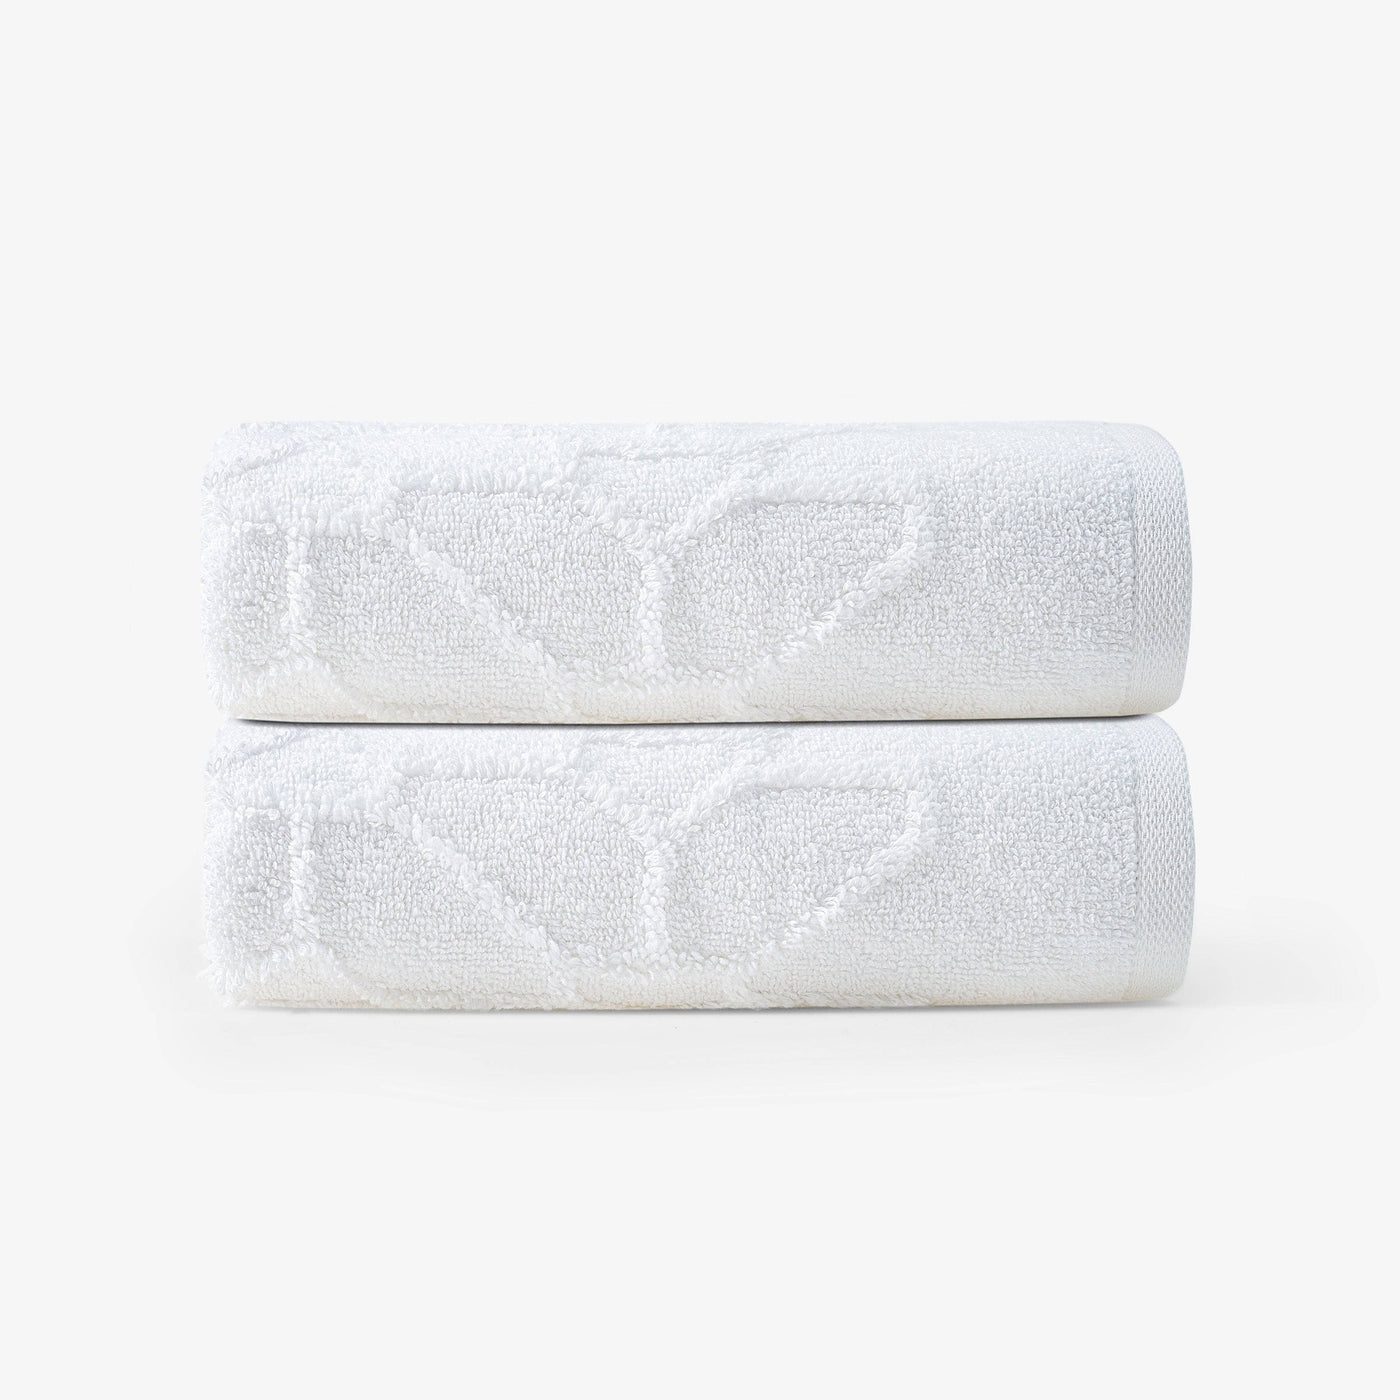 Harry Set of 2 Jacquard 100% Turkish Cotton Hand Towels, White Hand Towels sazy.com